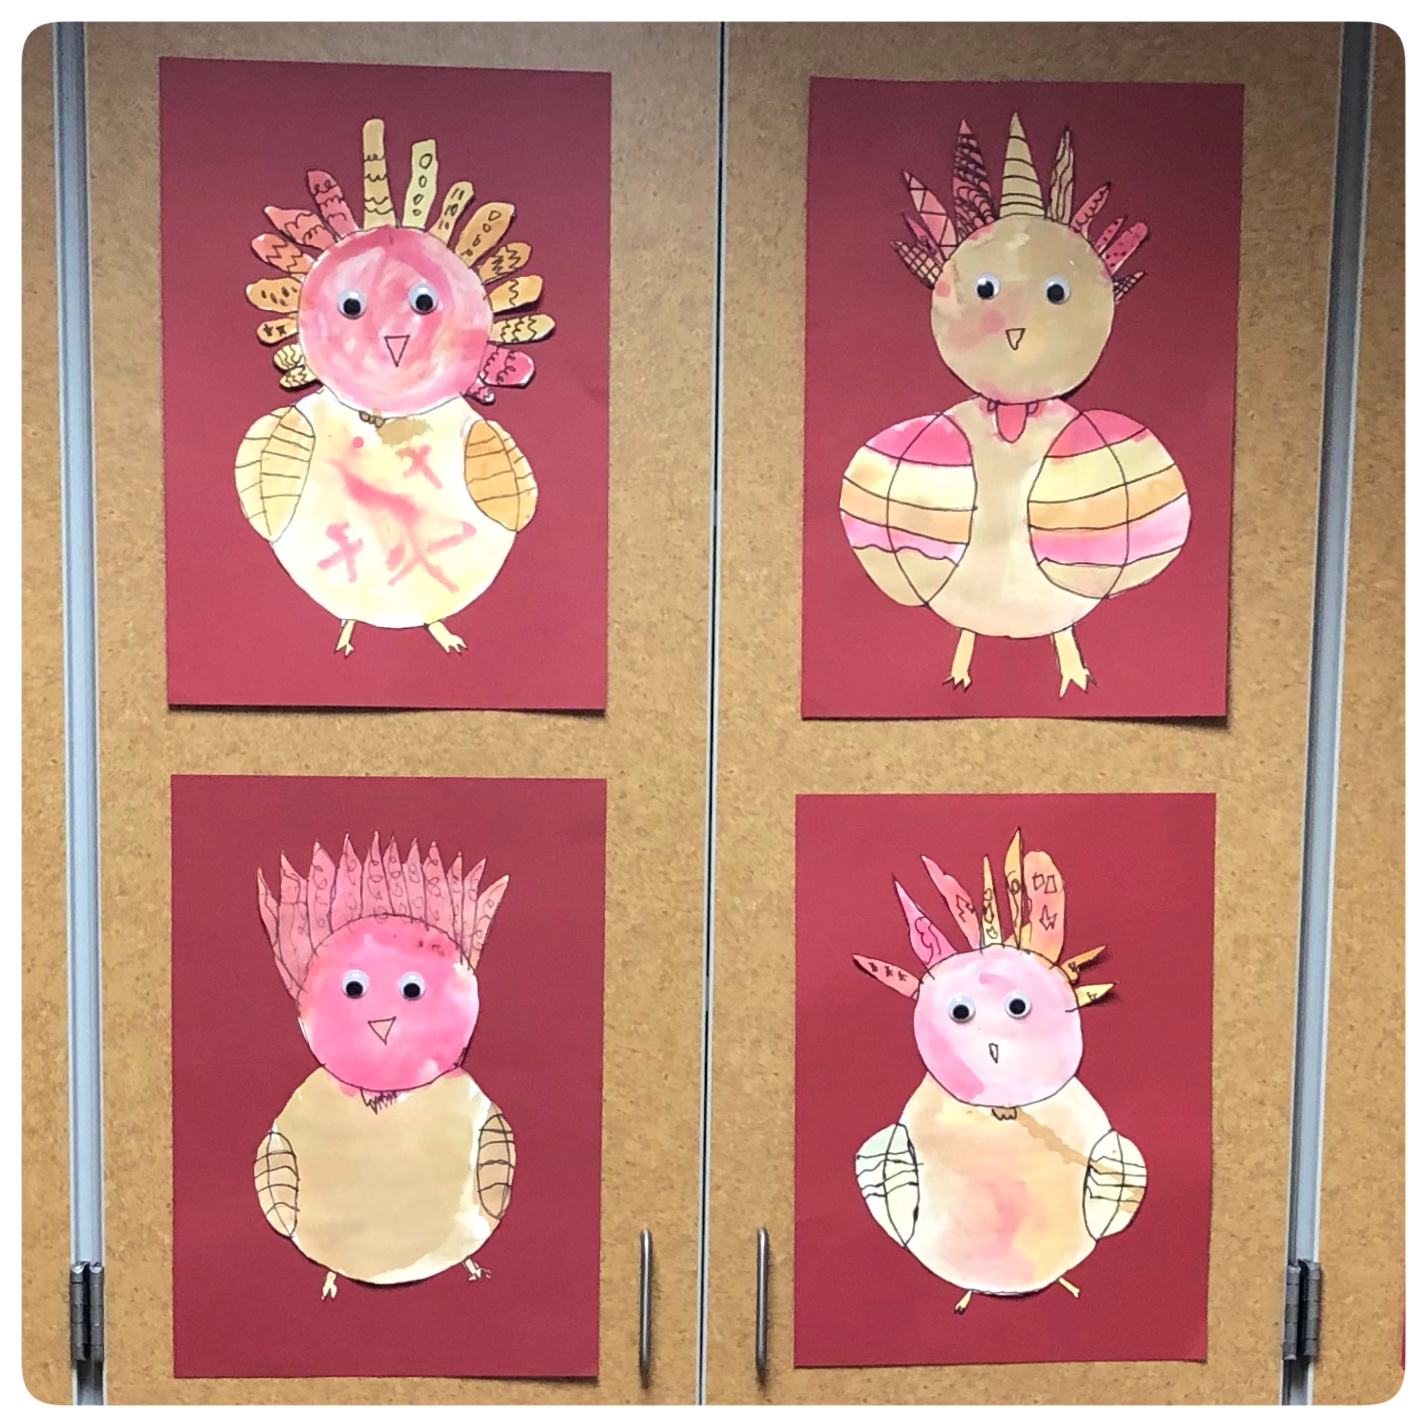 Wild Turkeys created by First Graders